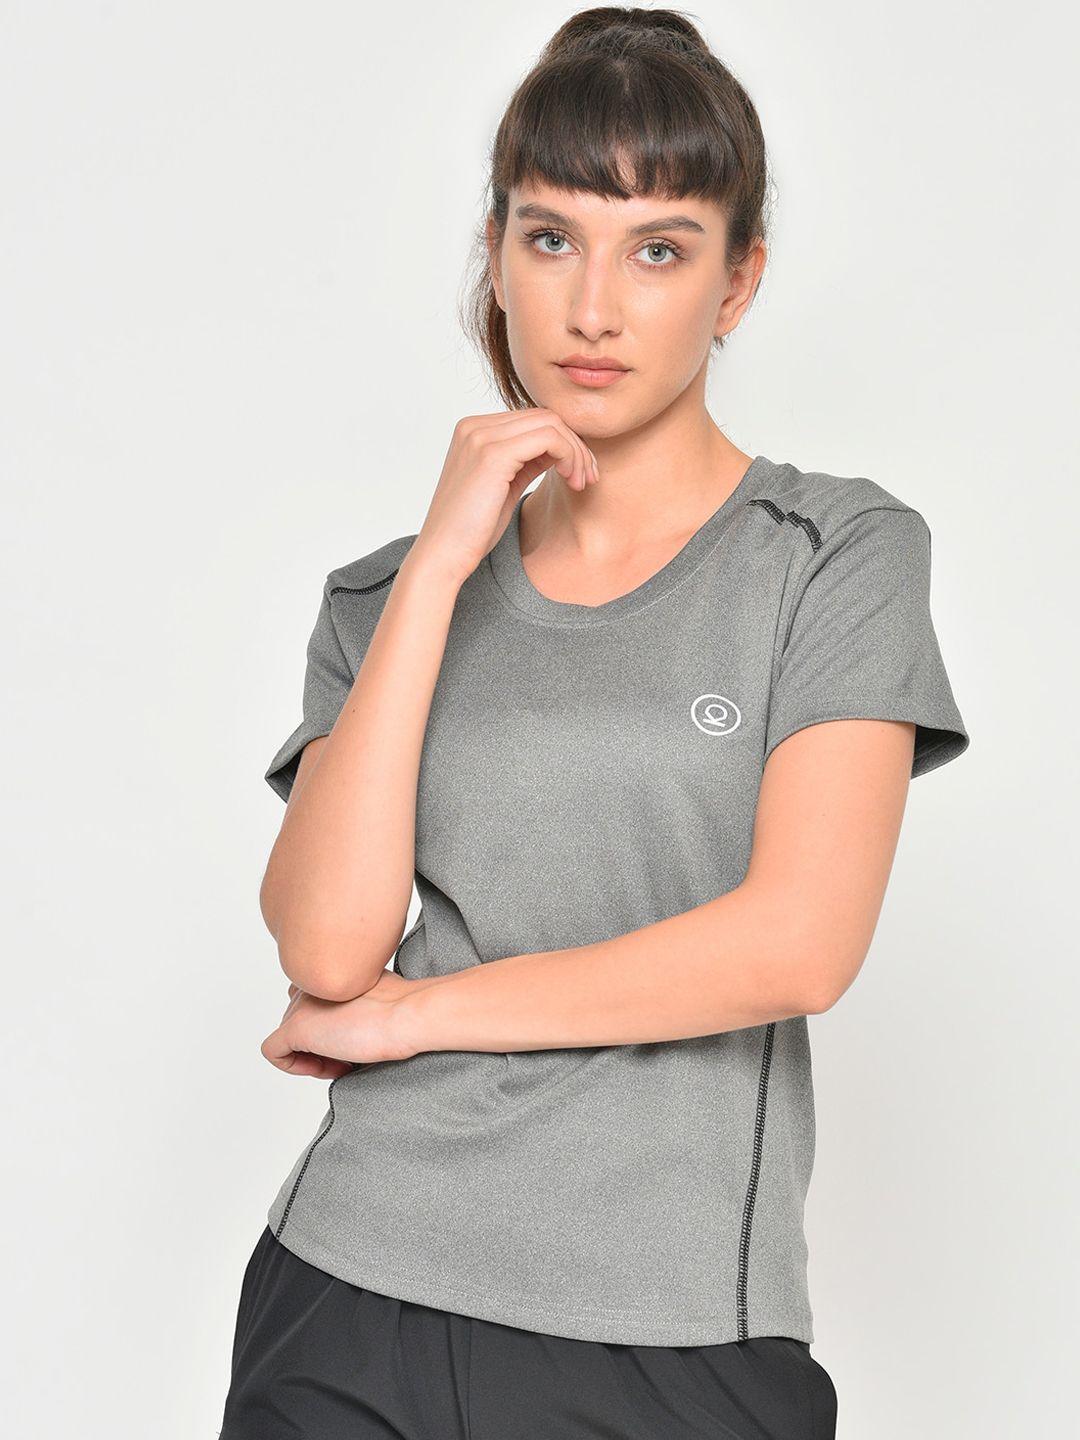 chkokko-women-grey-melange-training-or-gym-t-shirt